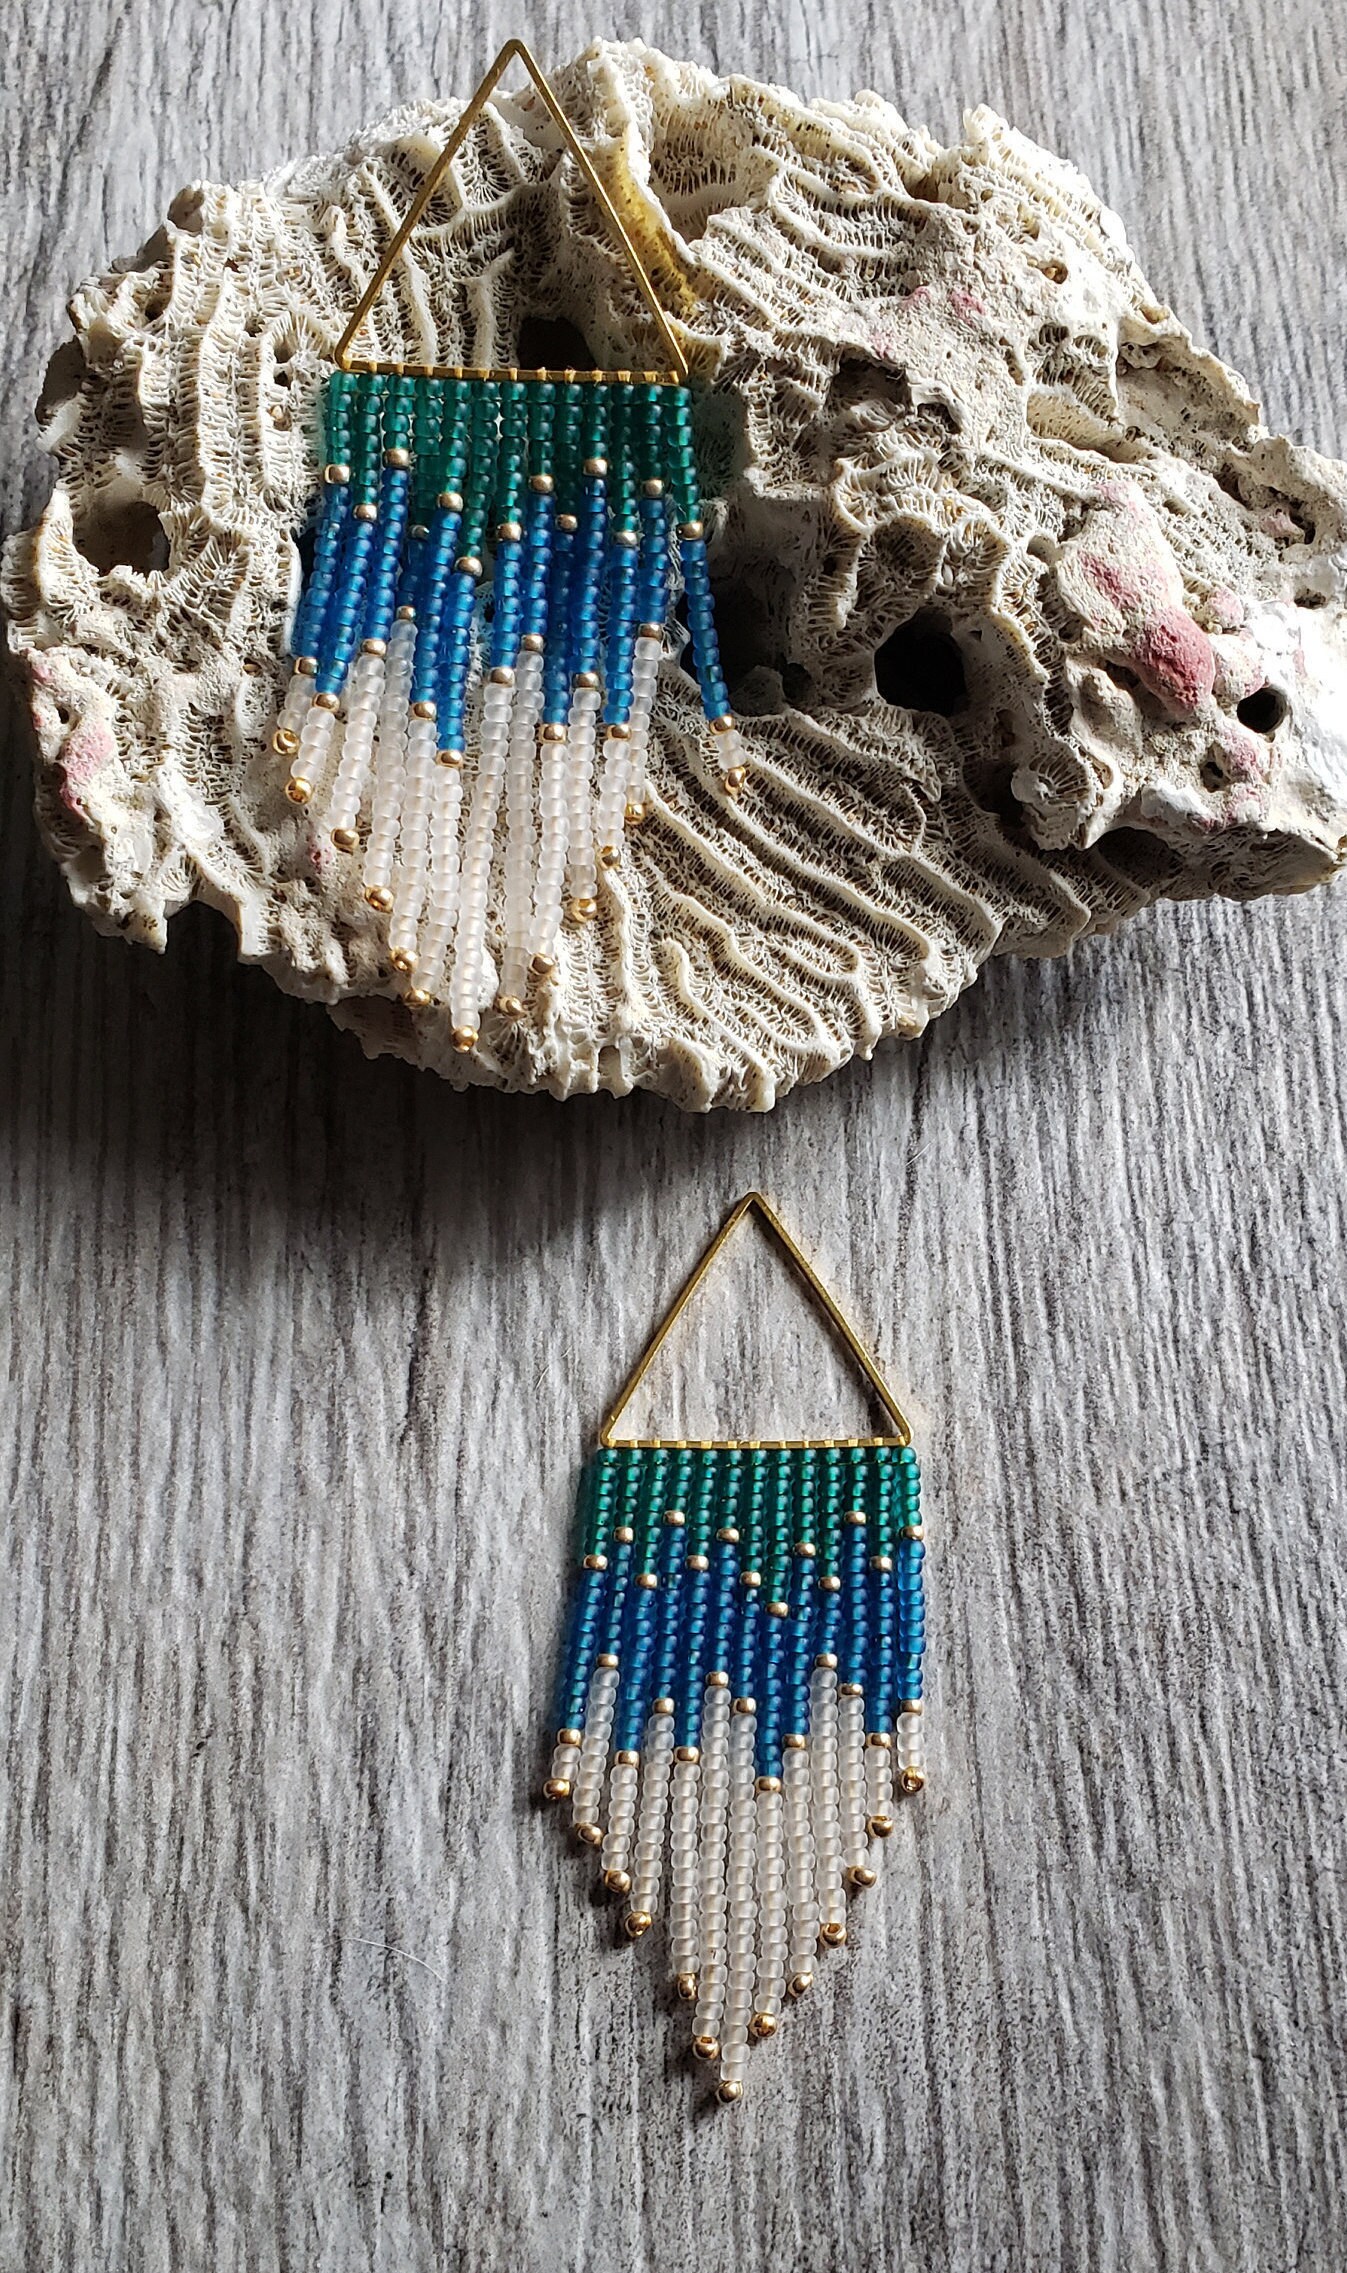 Beach Glass. Seed bead earrings. Fringe earrings. Handwoven | Etsy